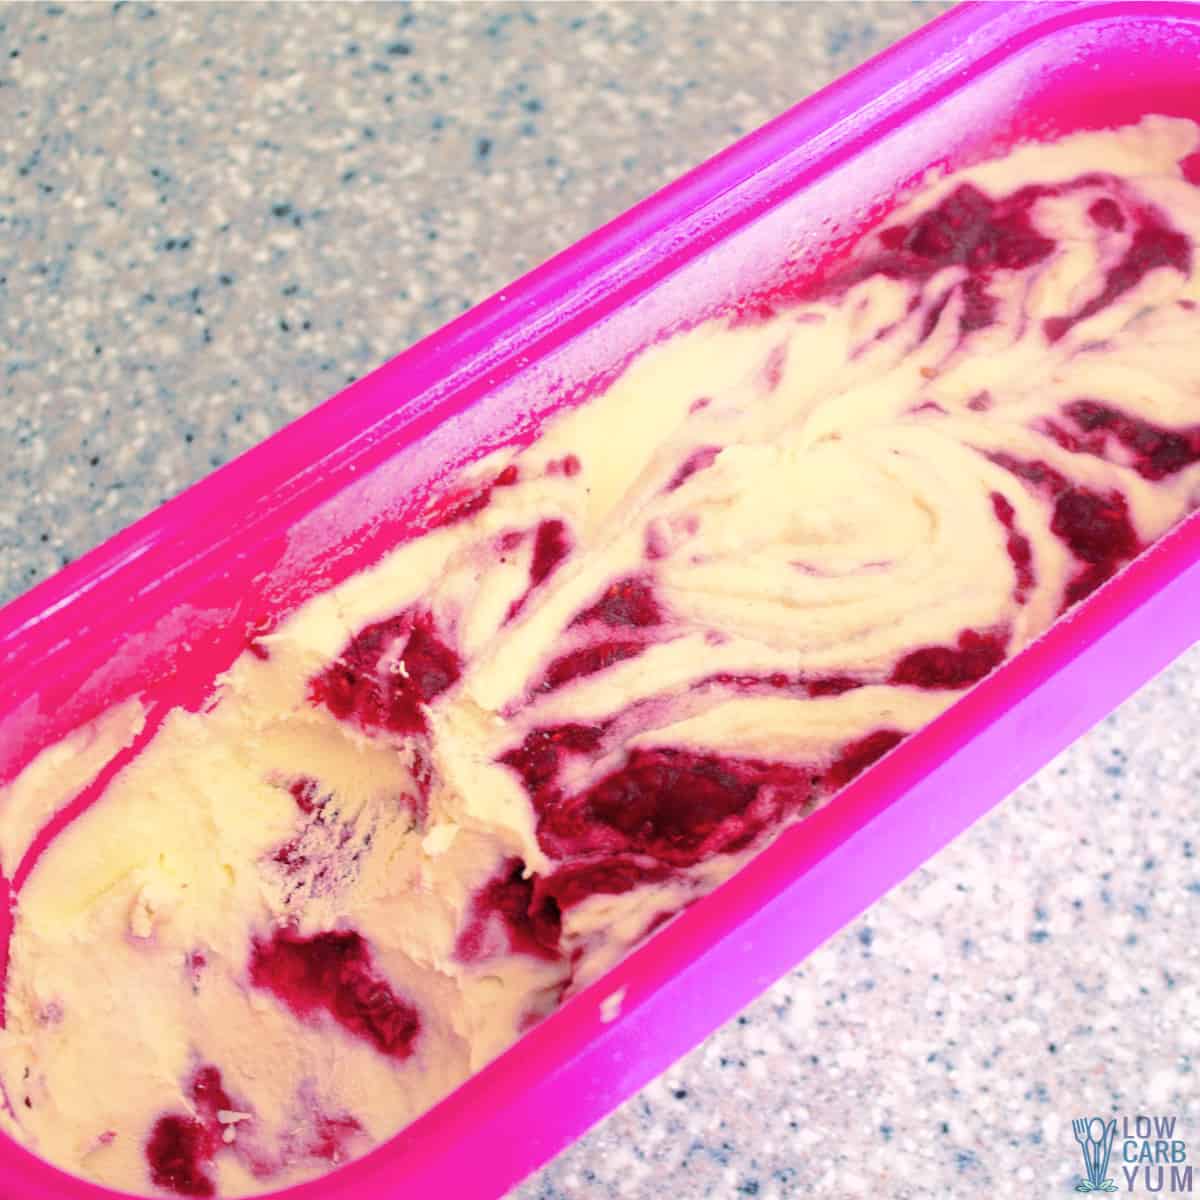 raspberry swirl ice cream in freezer tub.